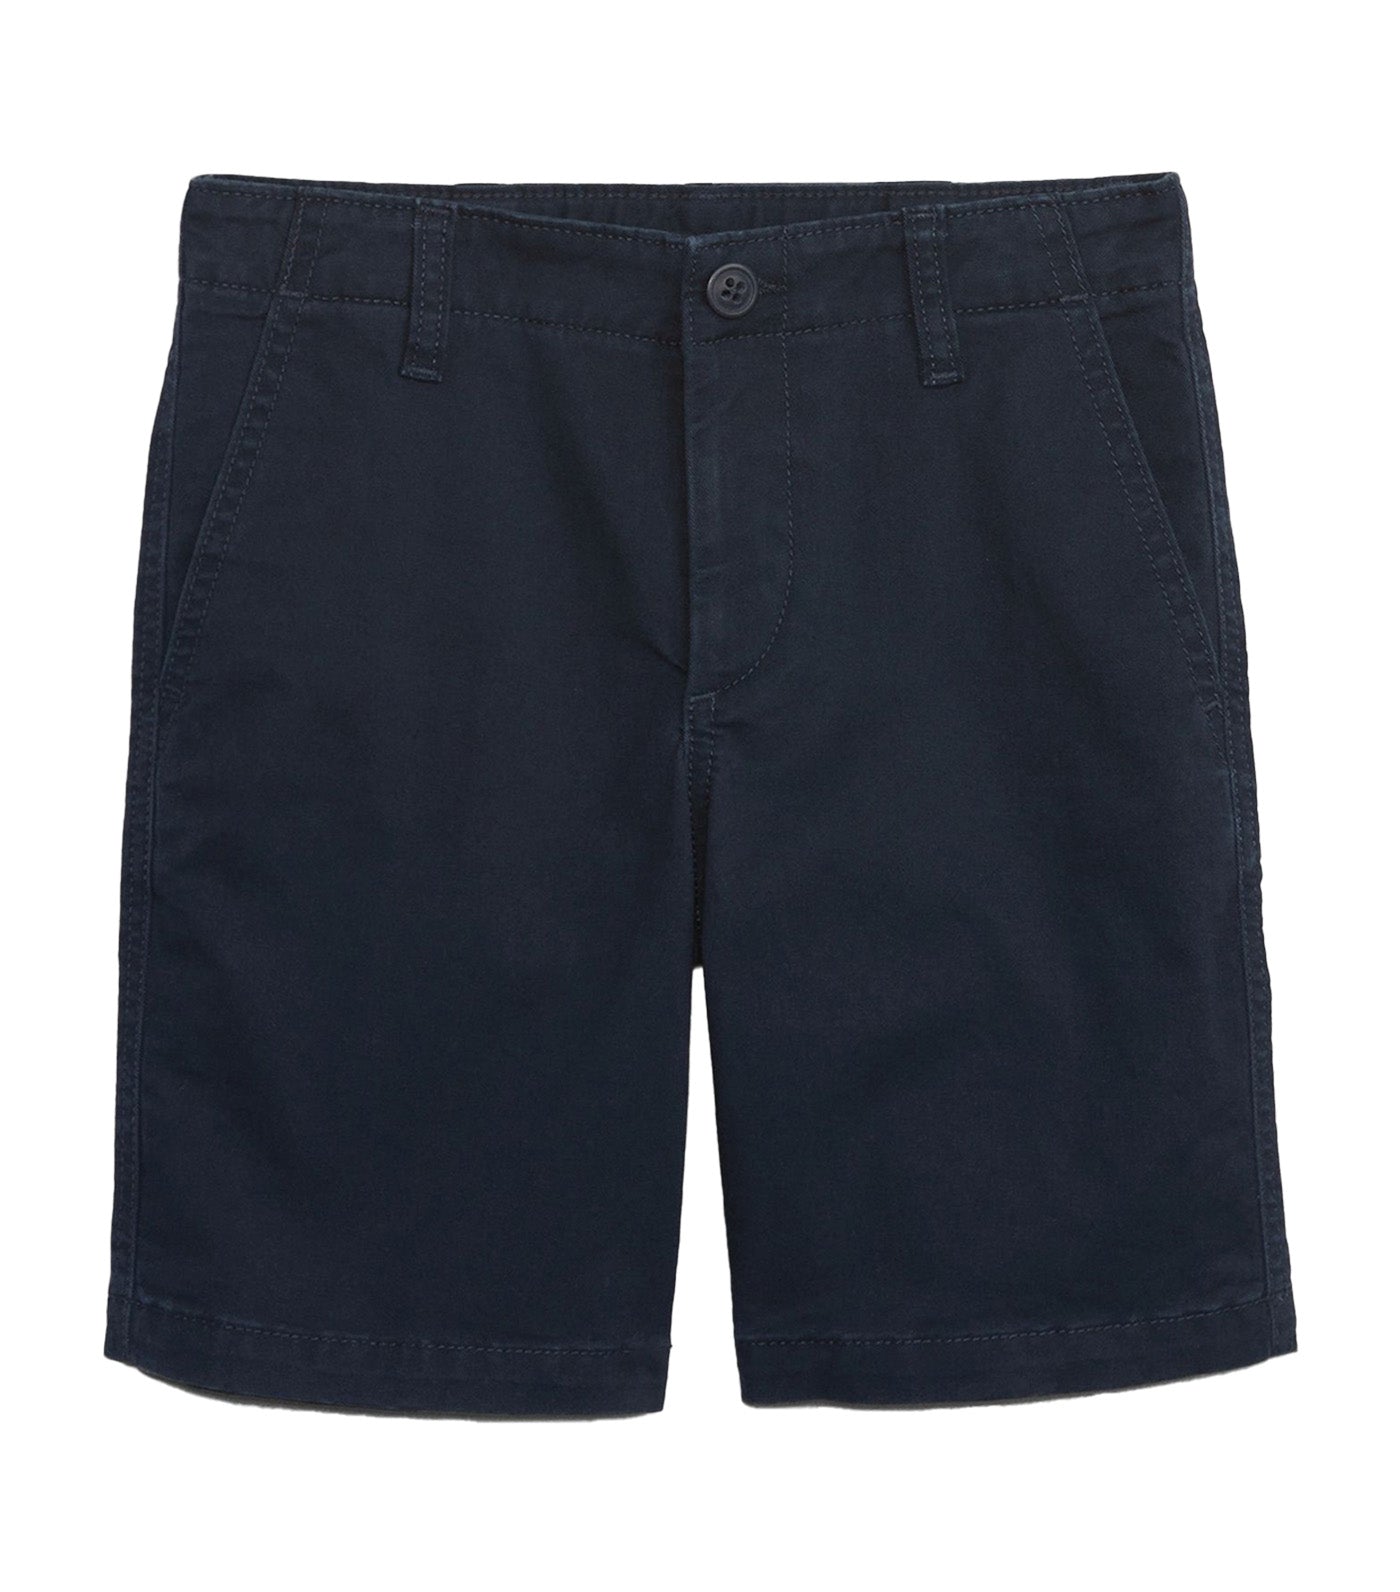 Khaki Shorts with Washwell - Blue Galaxy